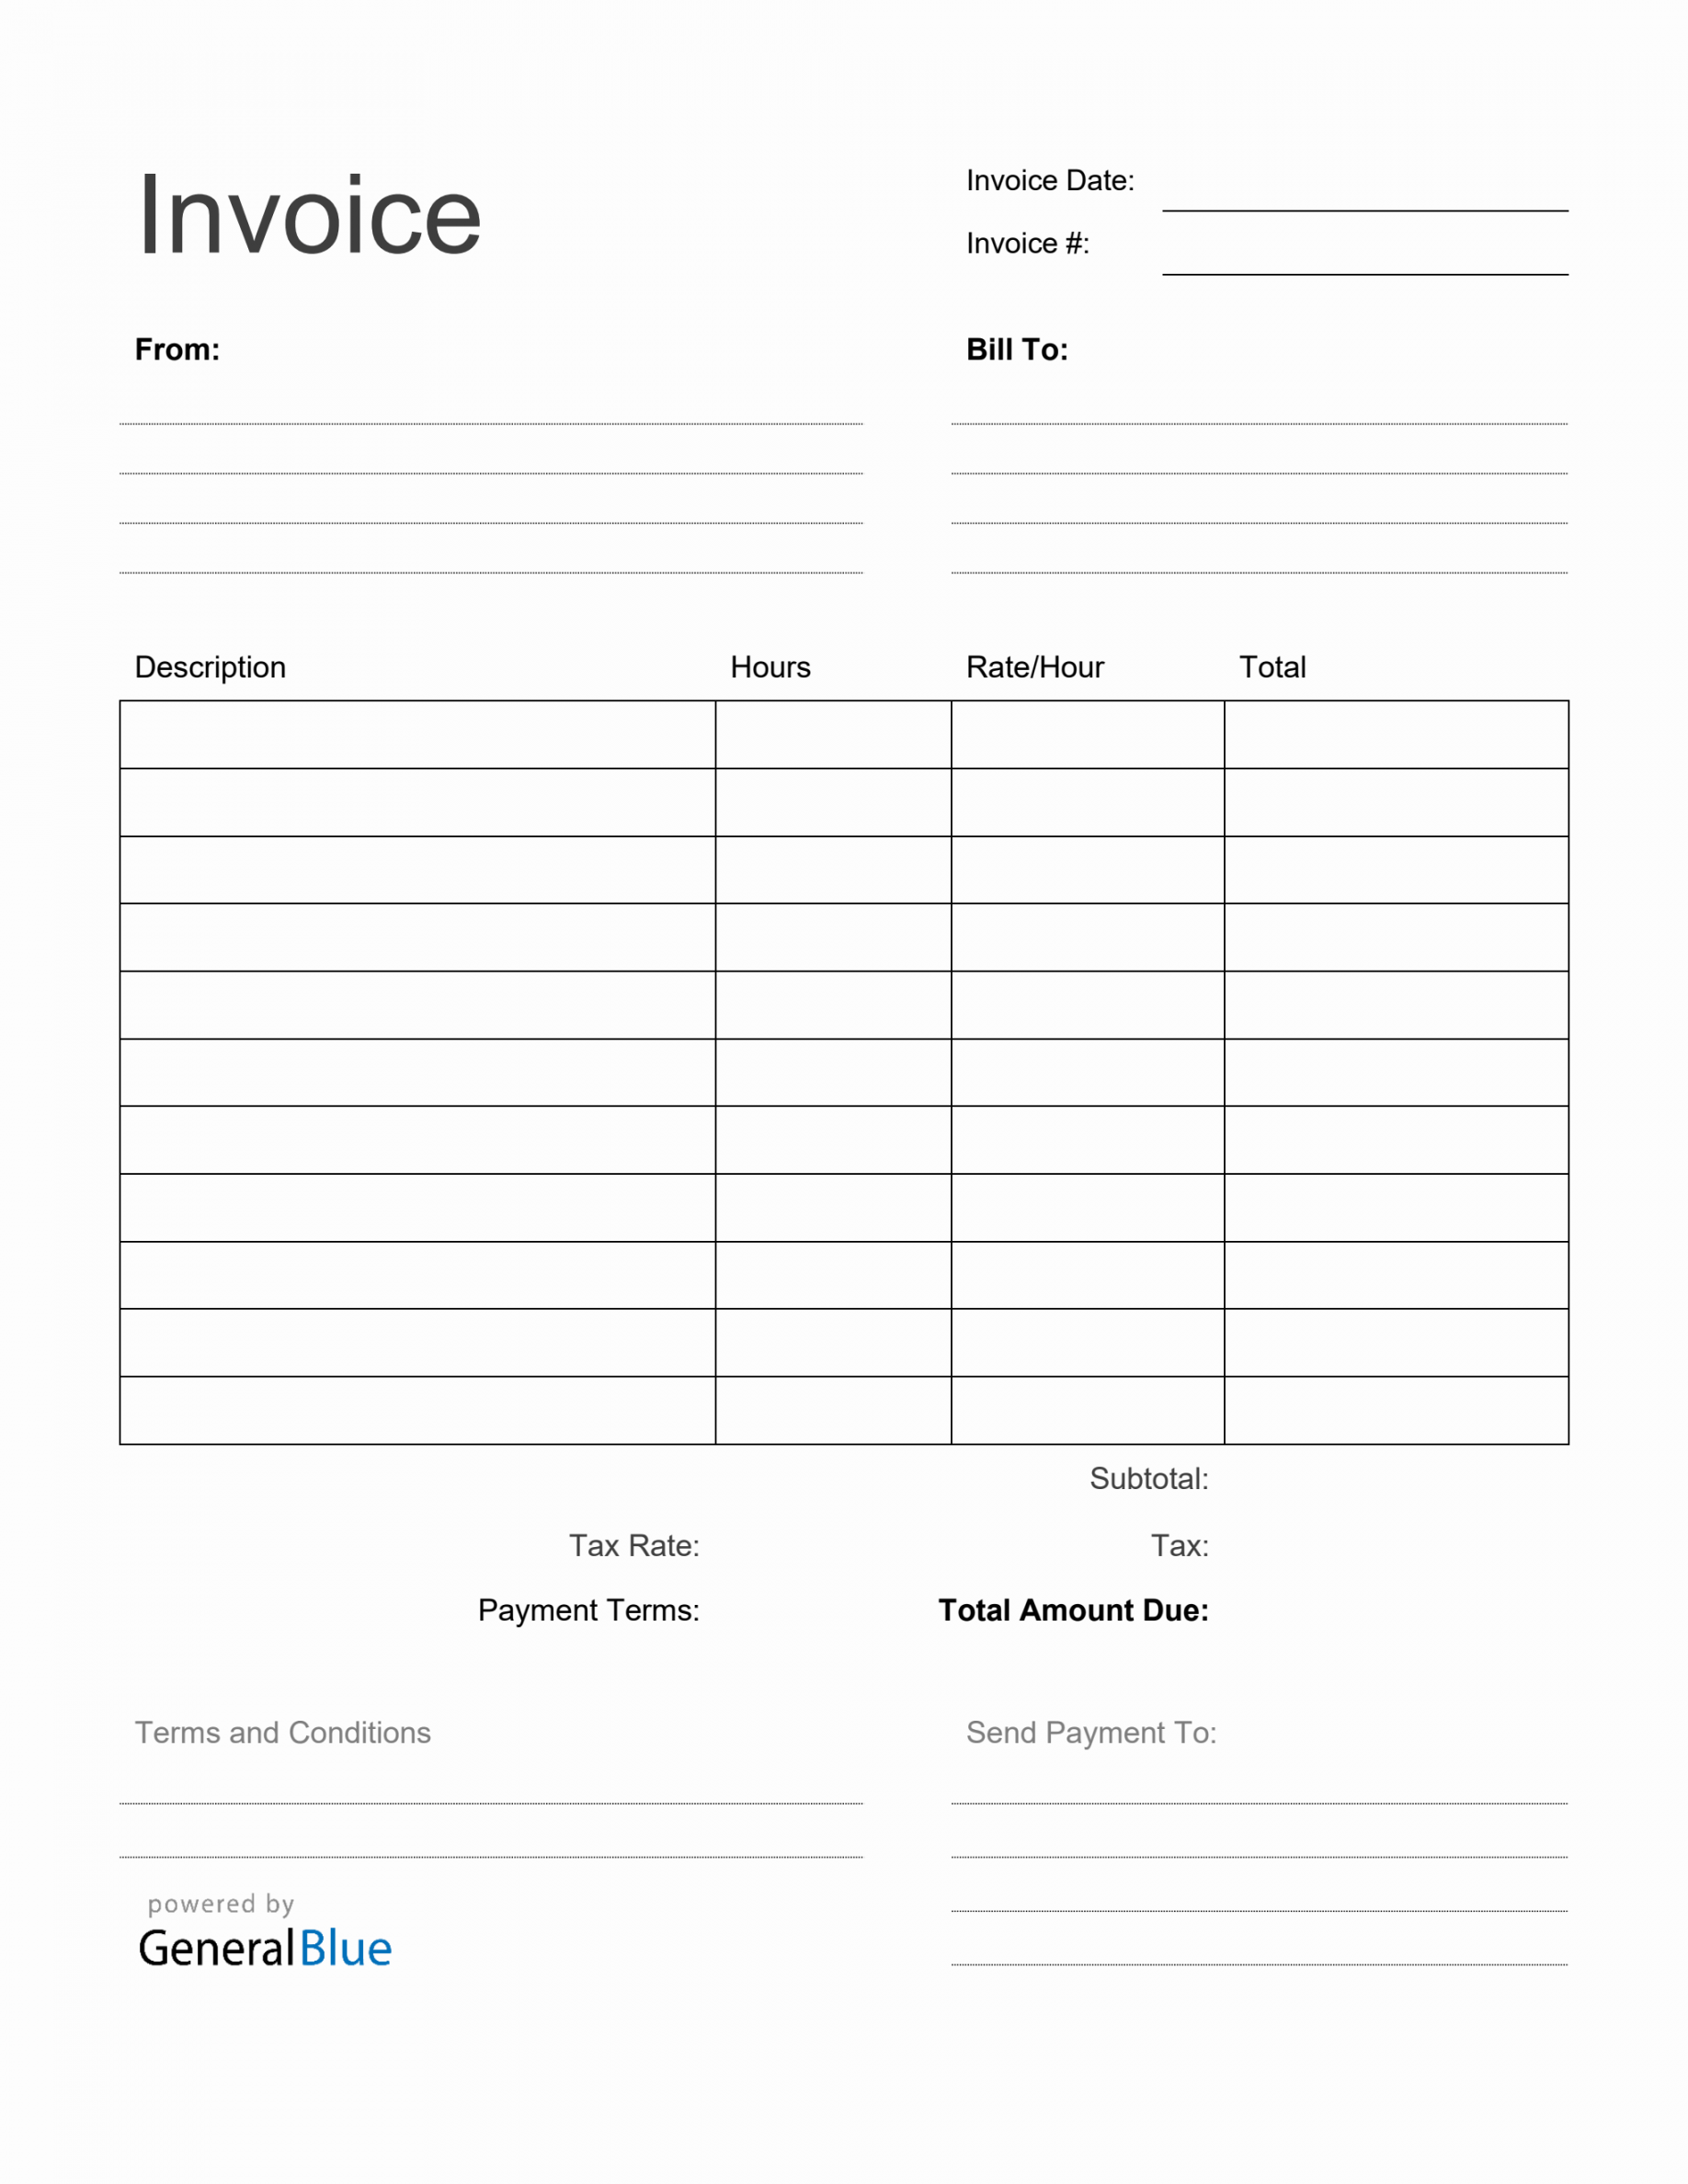 Free Invoice Template Printable - Printable - Blank Invoice Template in Word Printable